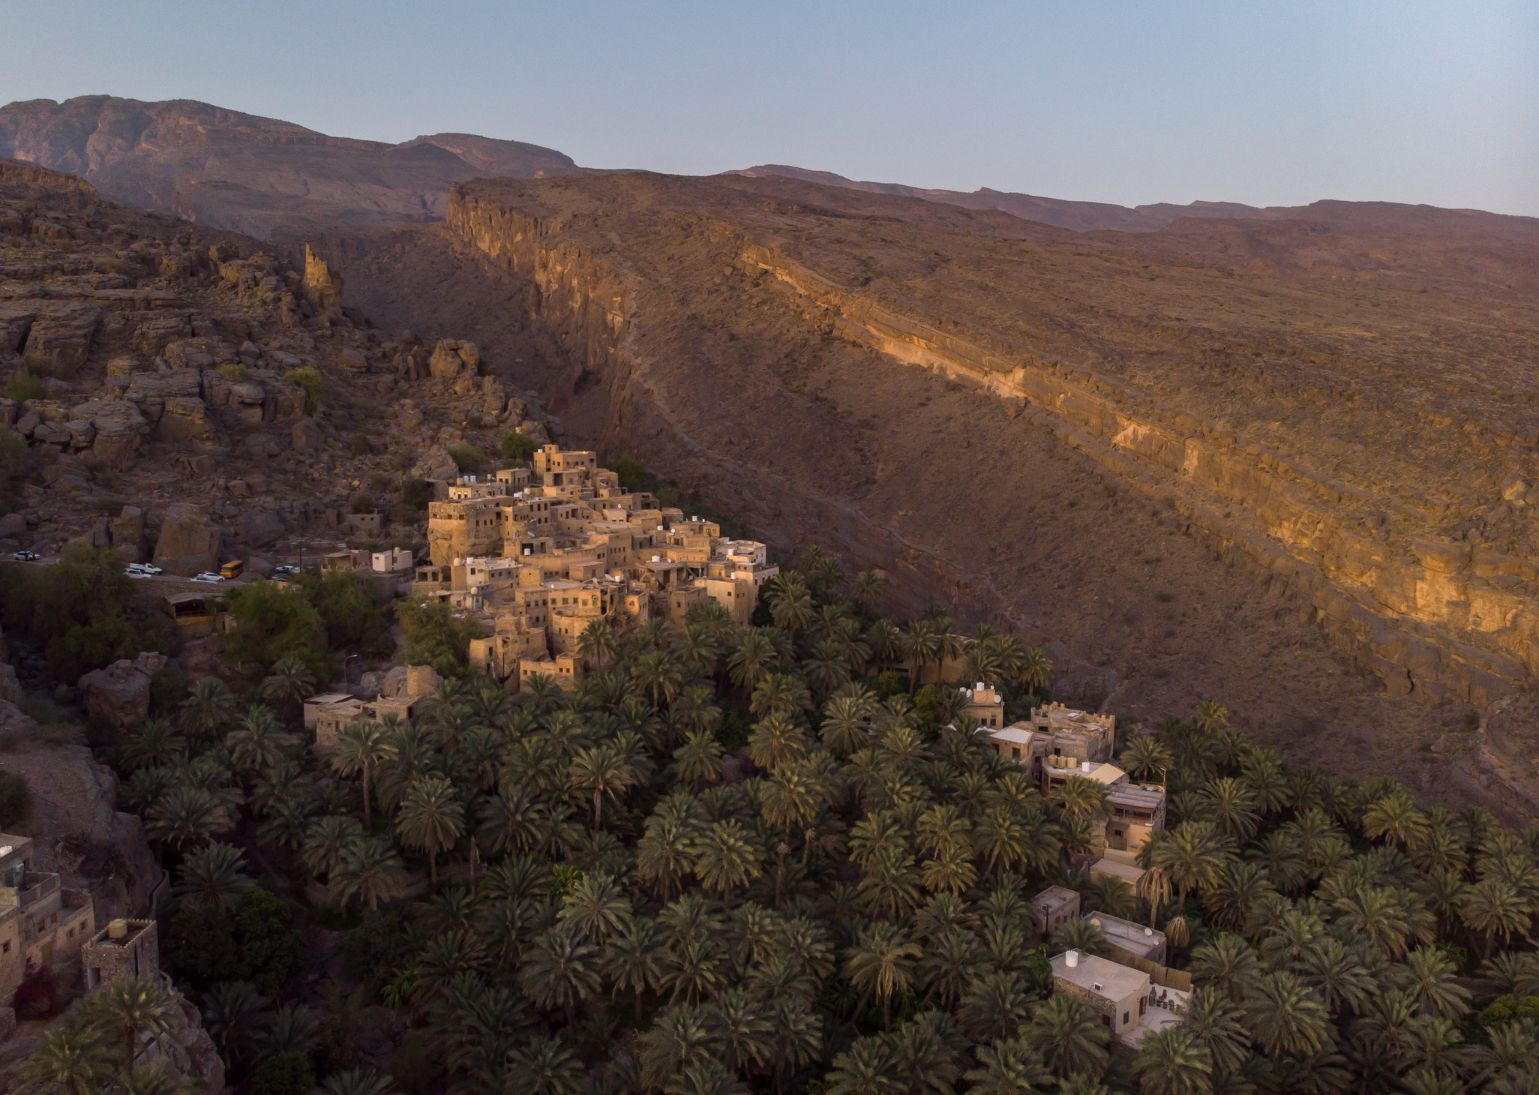 An aerial view of the Omani mud village of Misfat Al Abriyeen